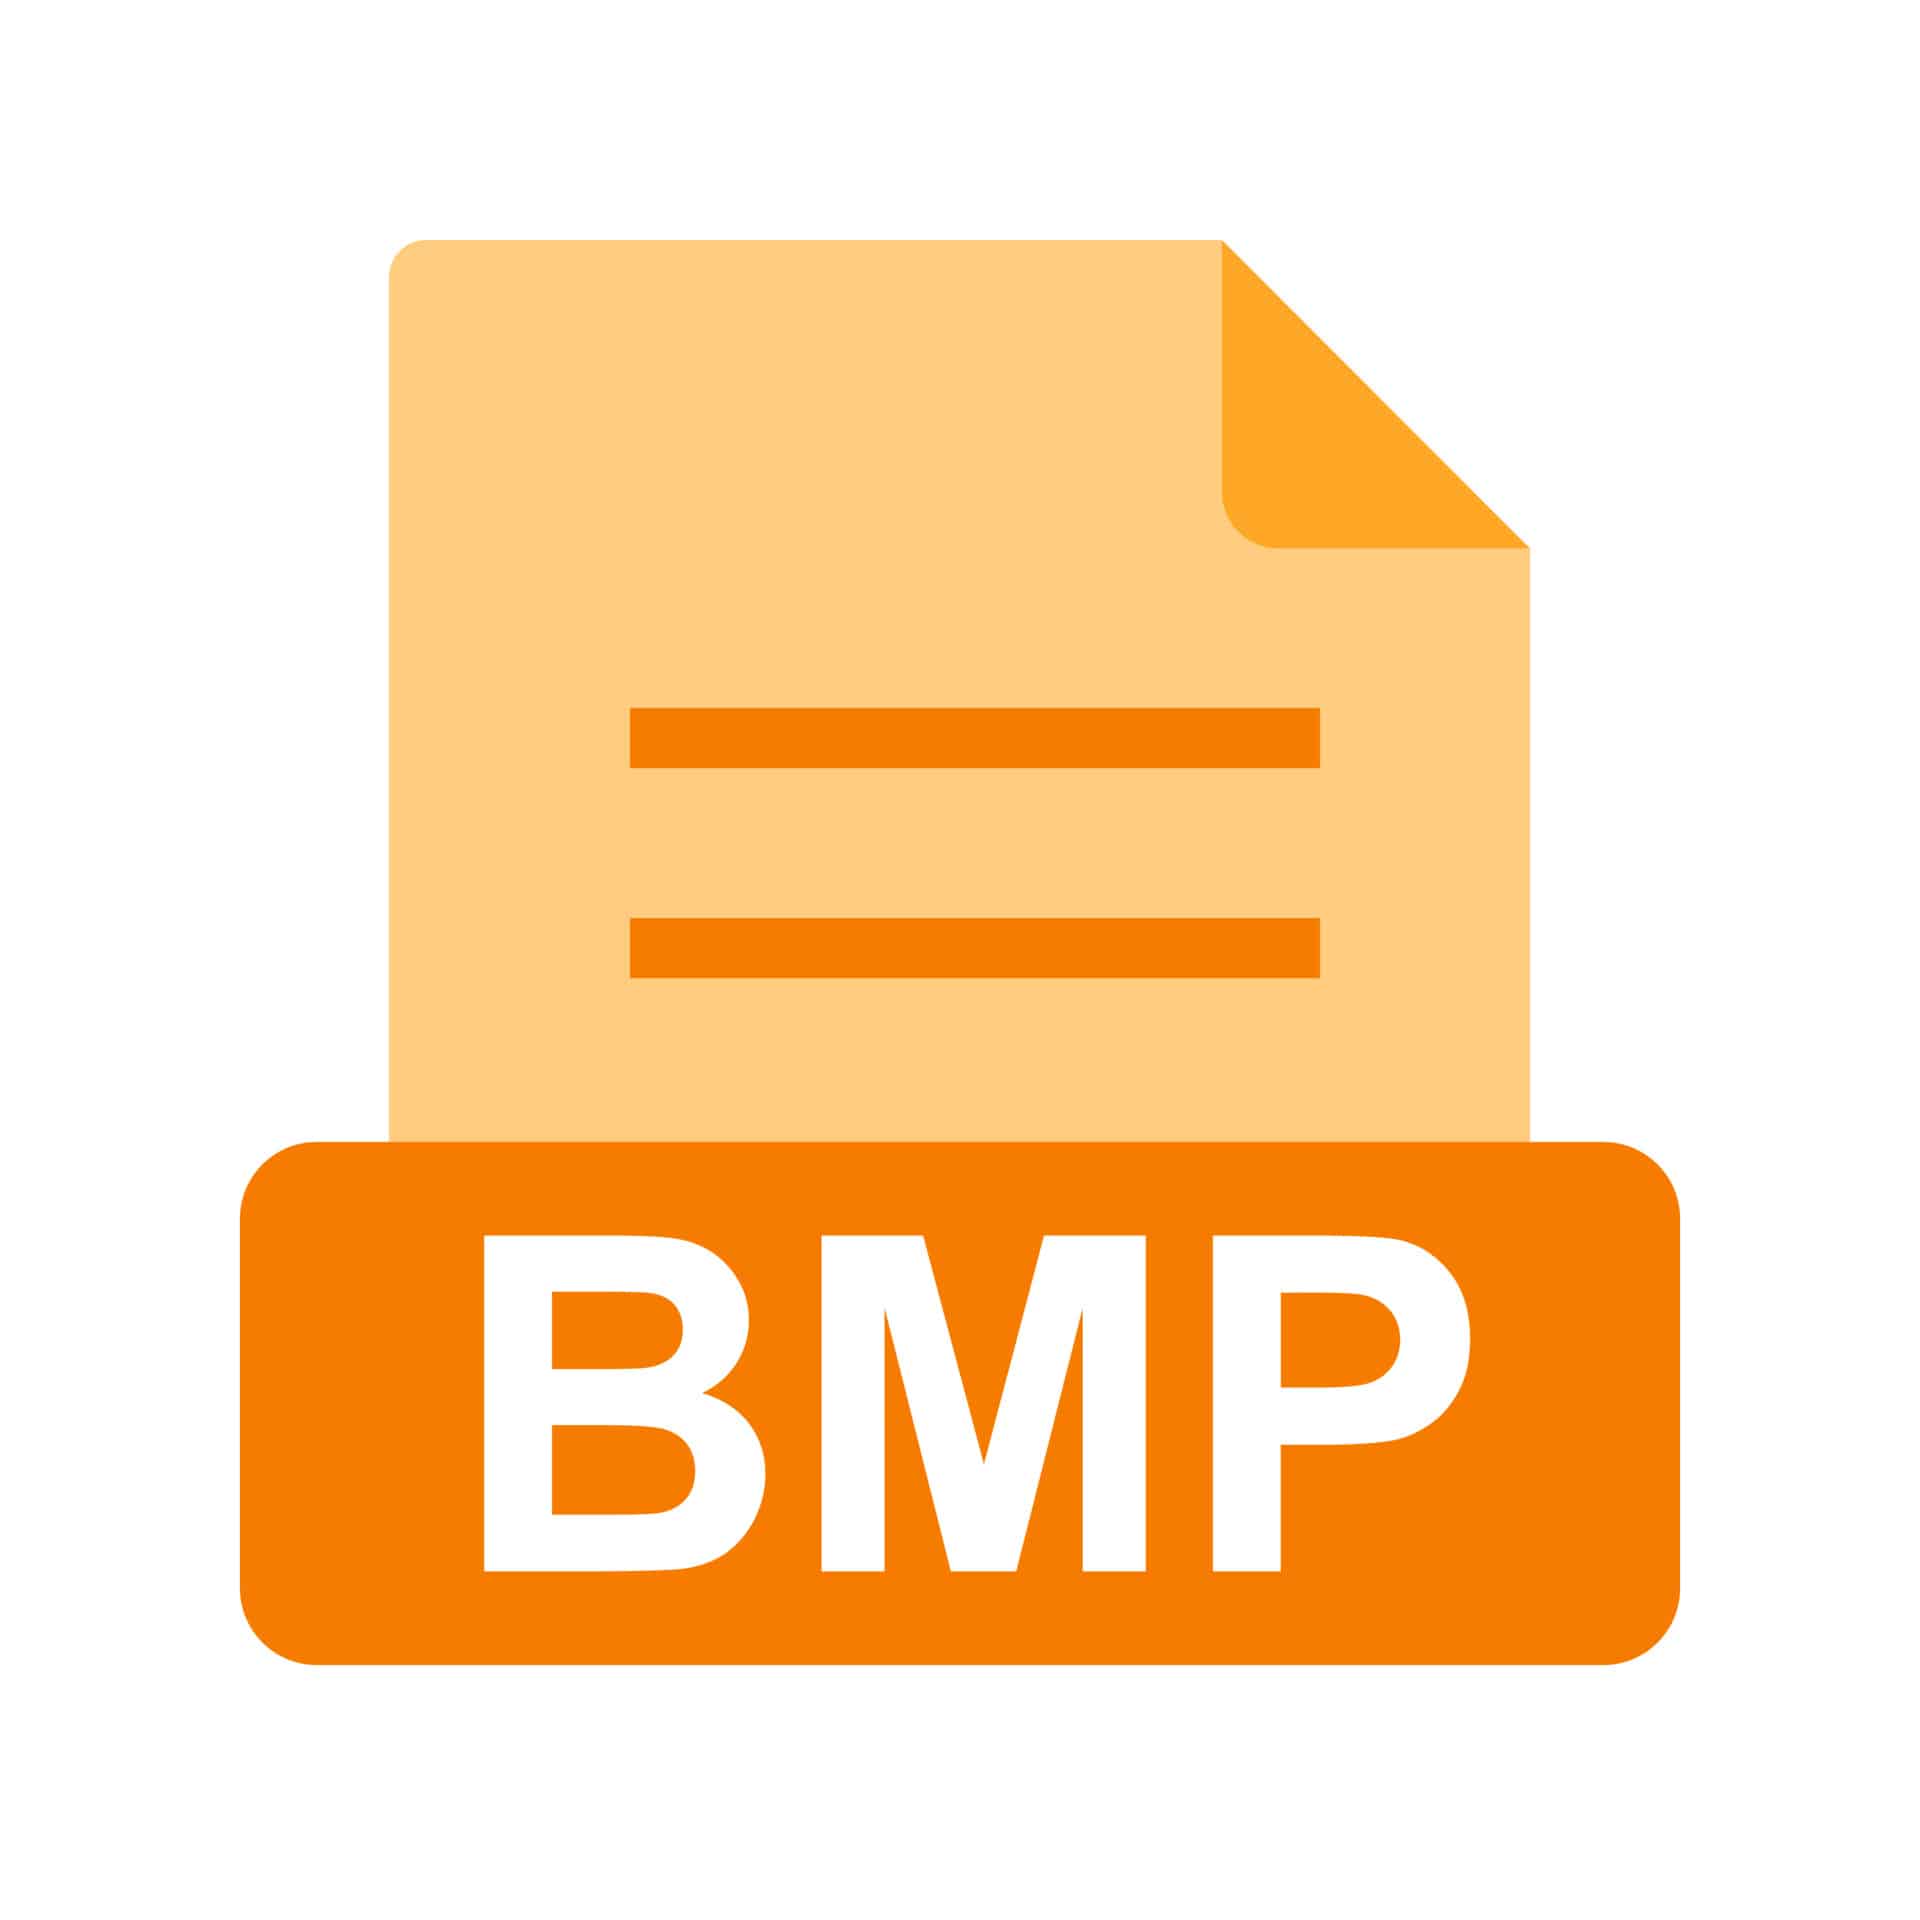 Formato de arquivo BMP